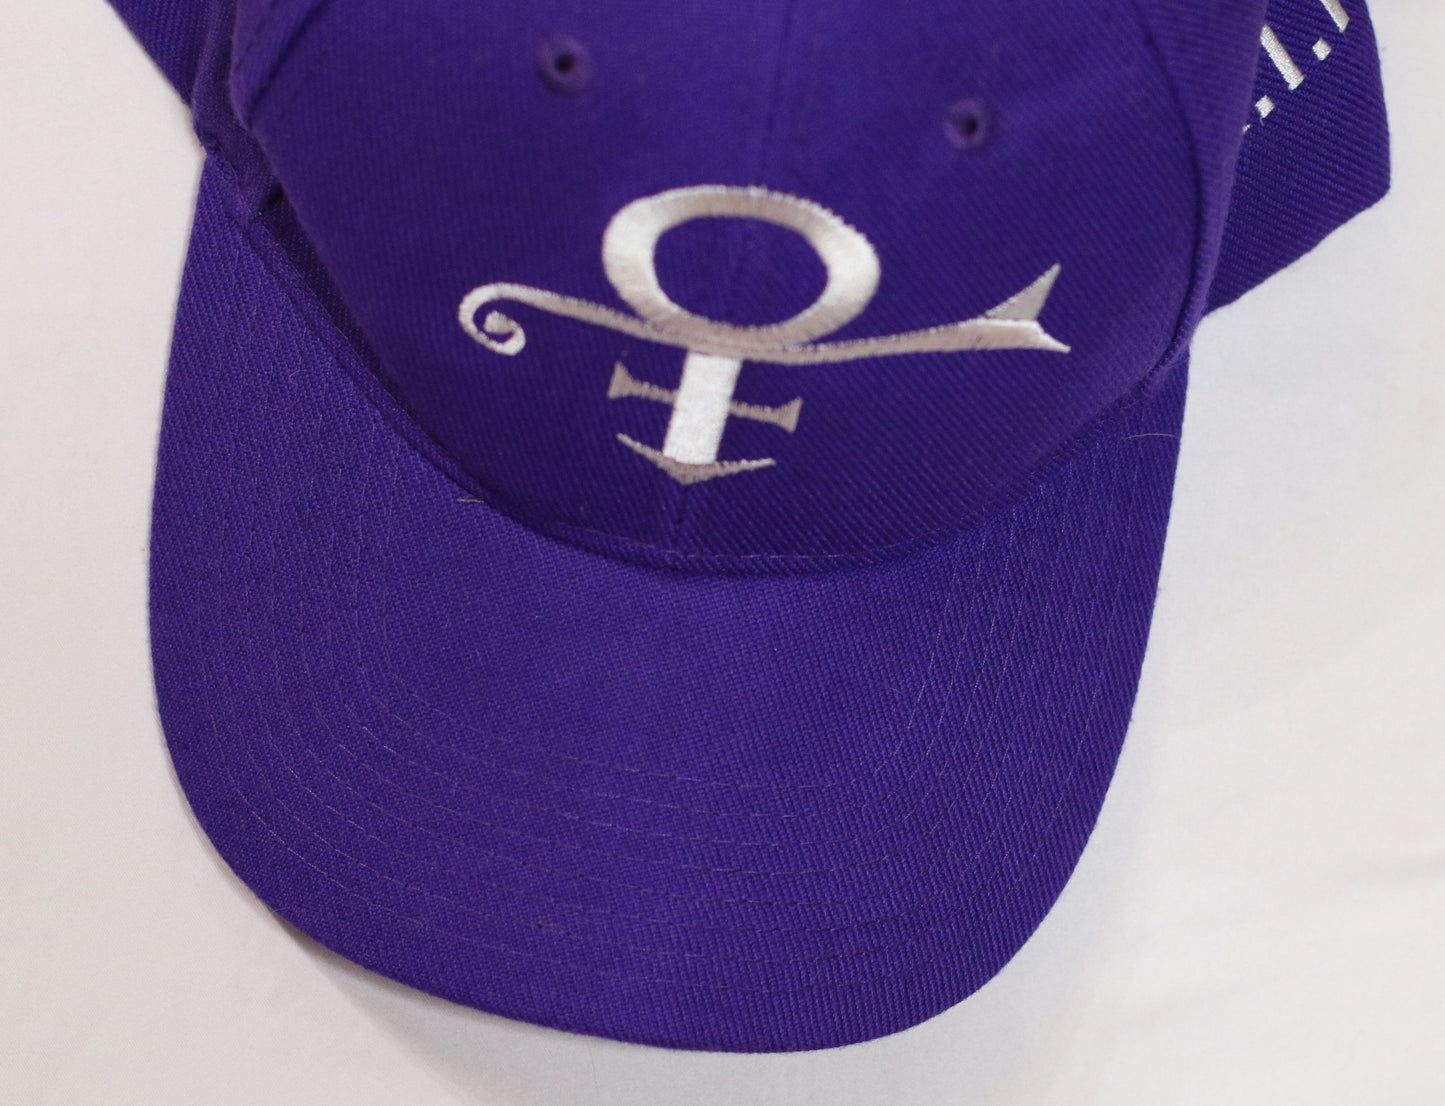 Prince RIP  Graphic T-Shirt -Hat Set